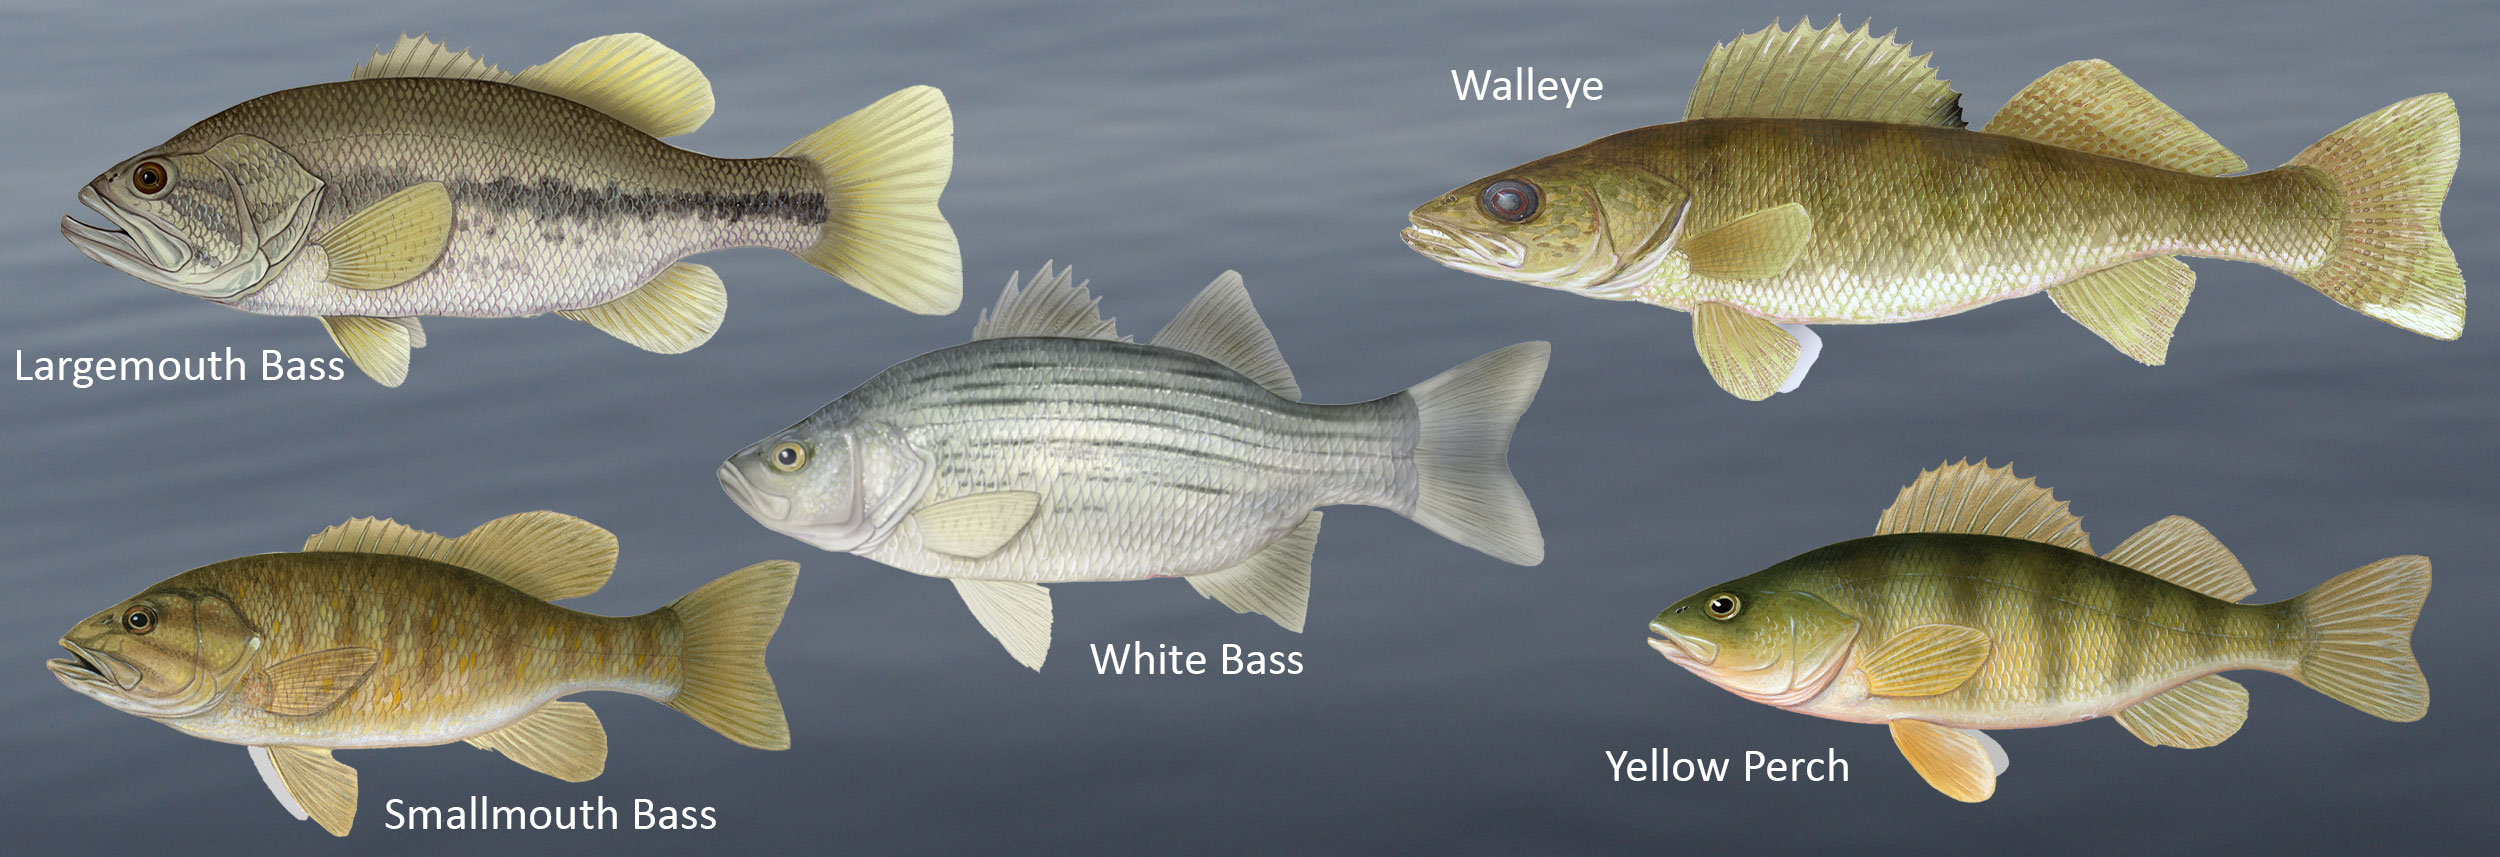 Fish species very susceptible to barotrauma